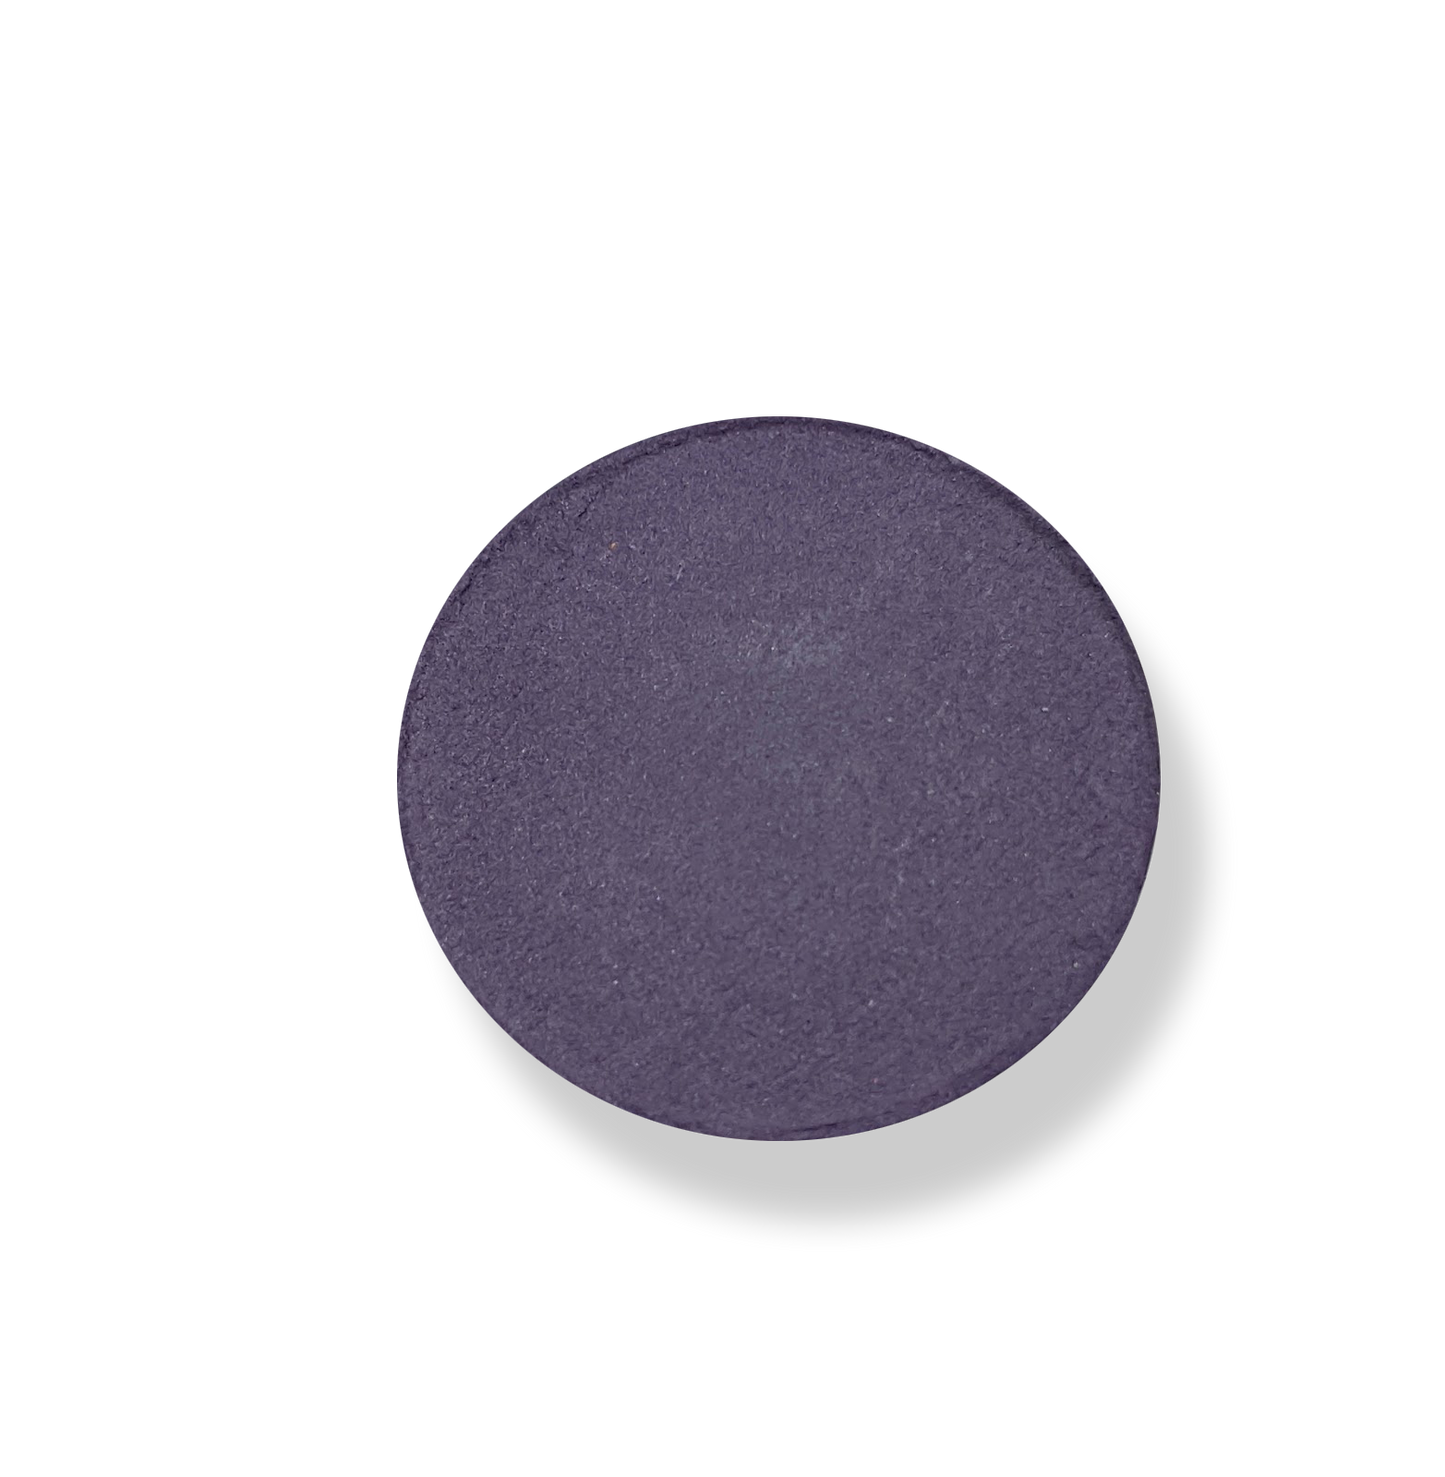 Vex - Matte Eyeshadow Grey Purple